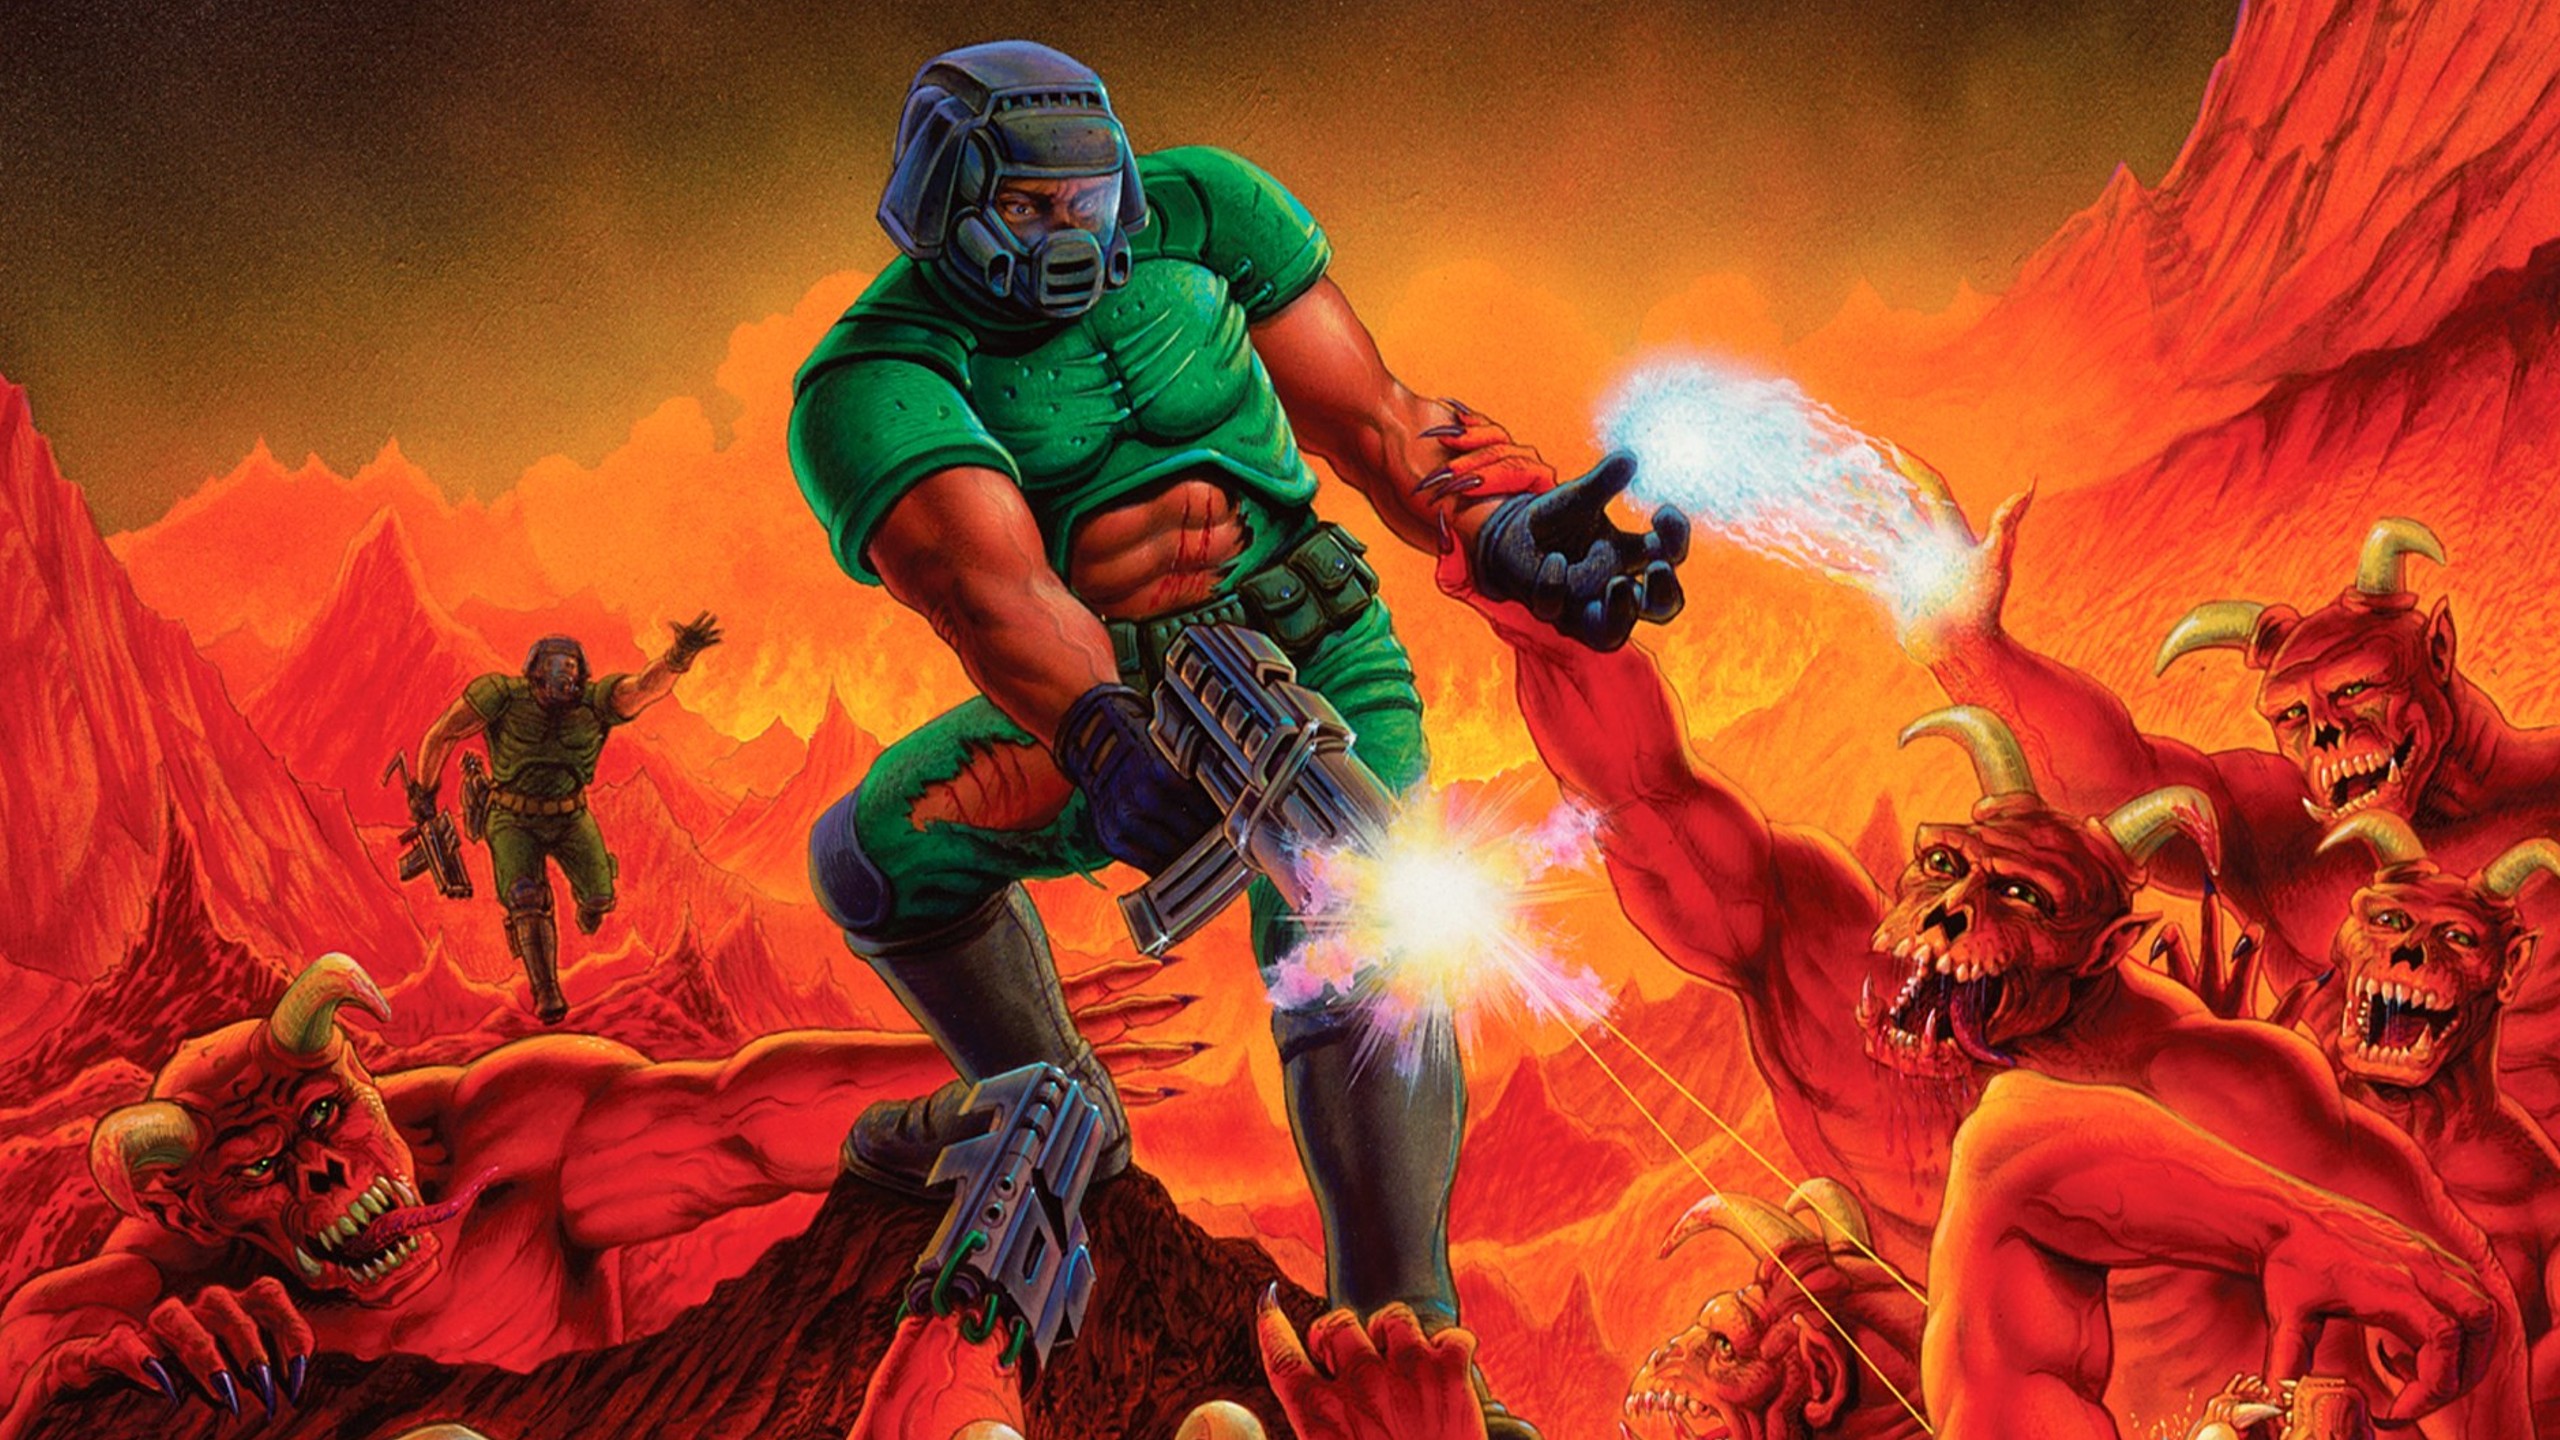 Doom Cover Art